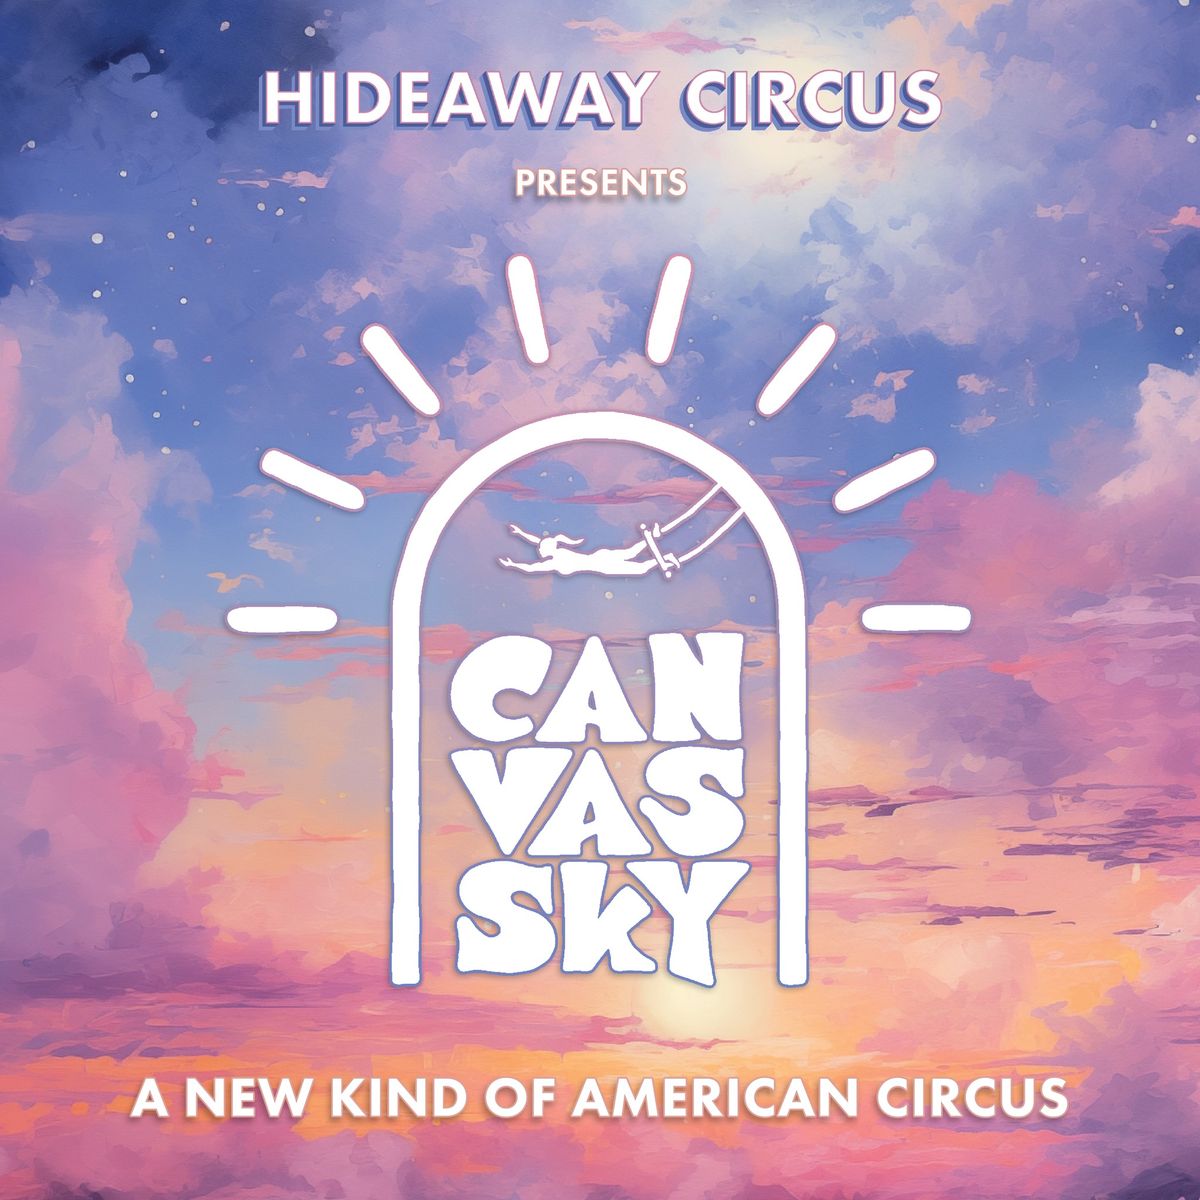 Hideaway Circus Presents Canvas Sky